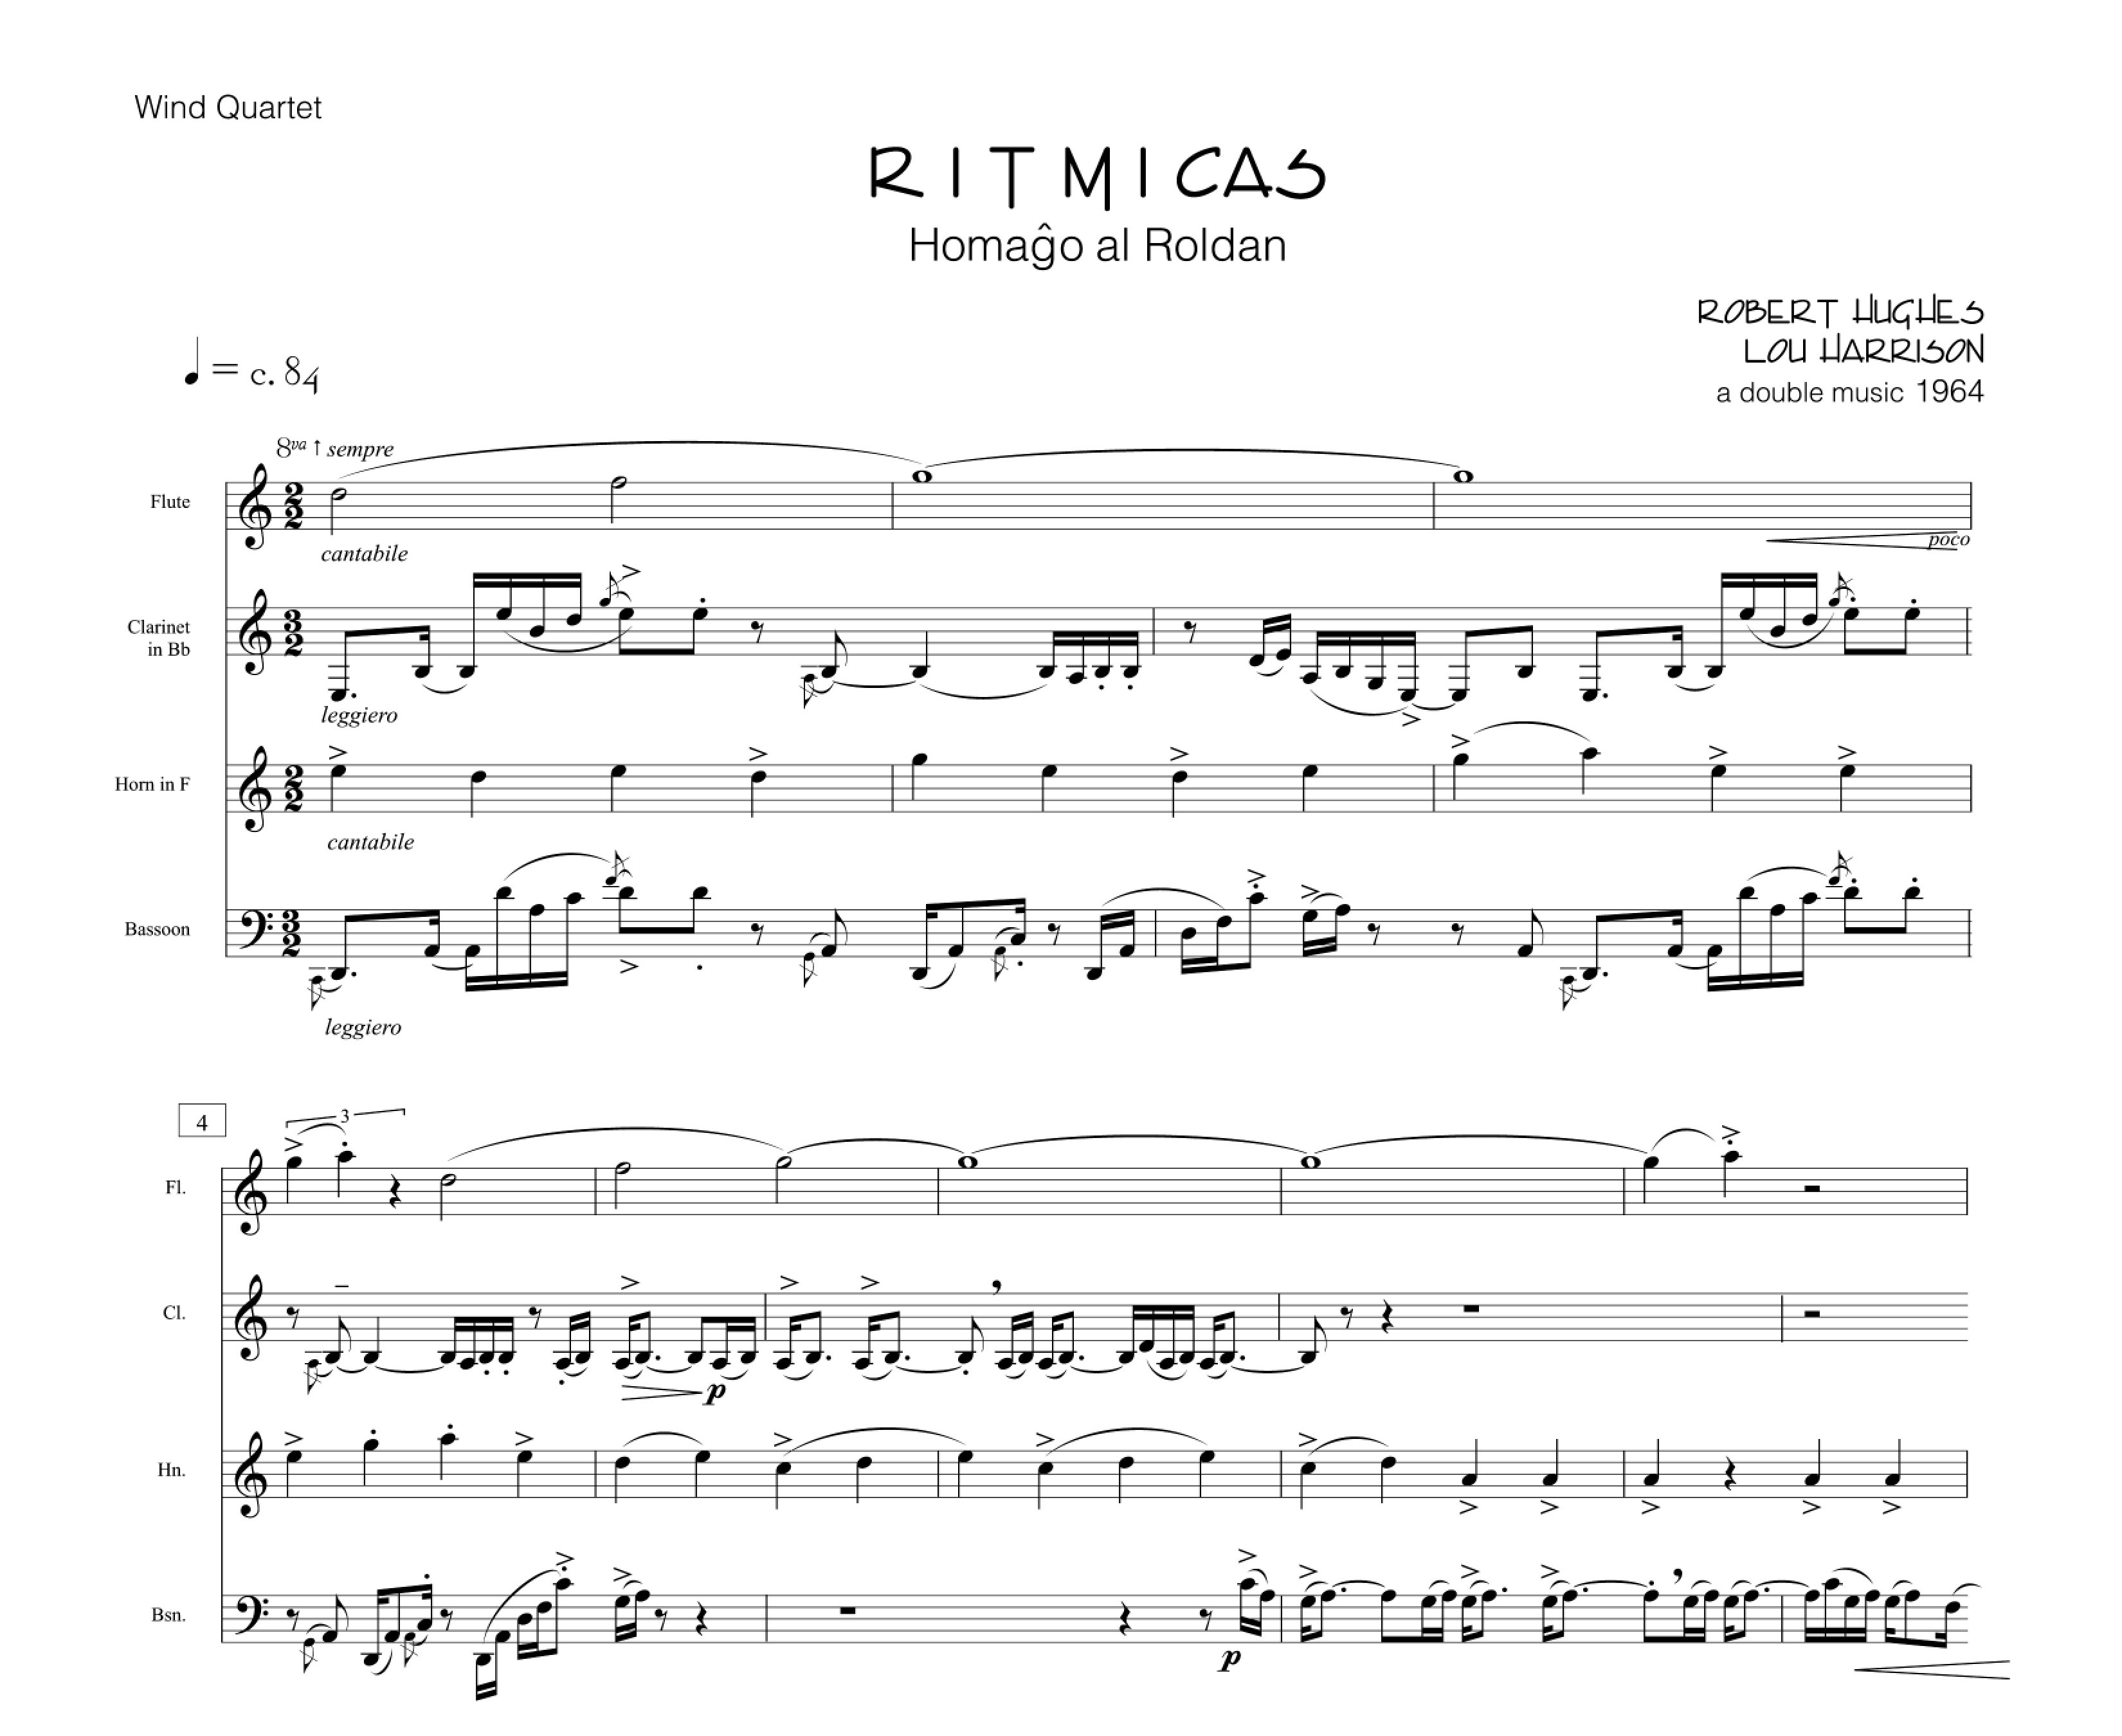 sample page, music score 'Ritmicas, Homago al Roldan' a double music for wind quartet, by Lou Harrison and Robert Hughes